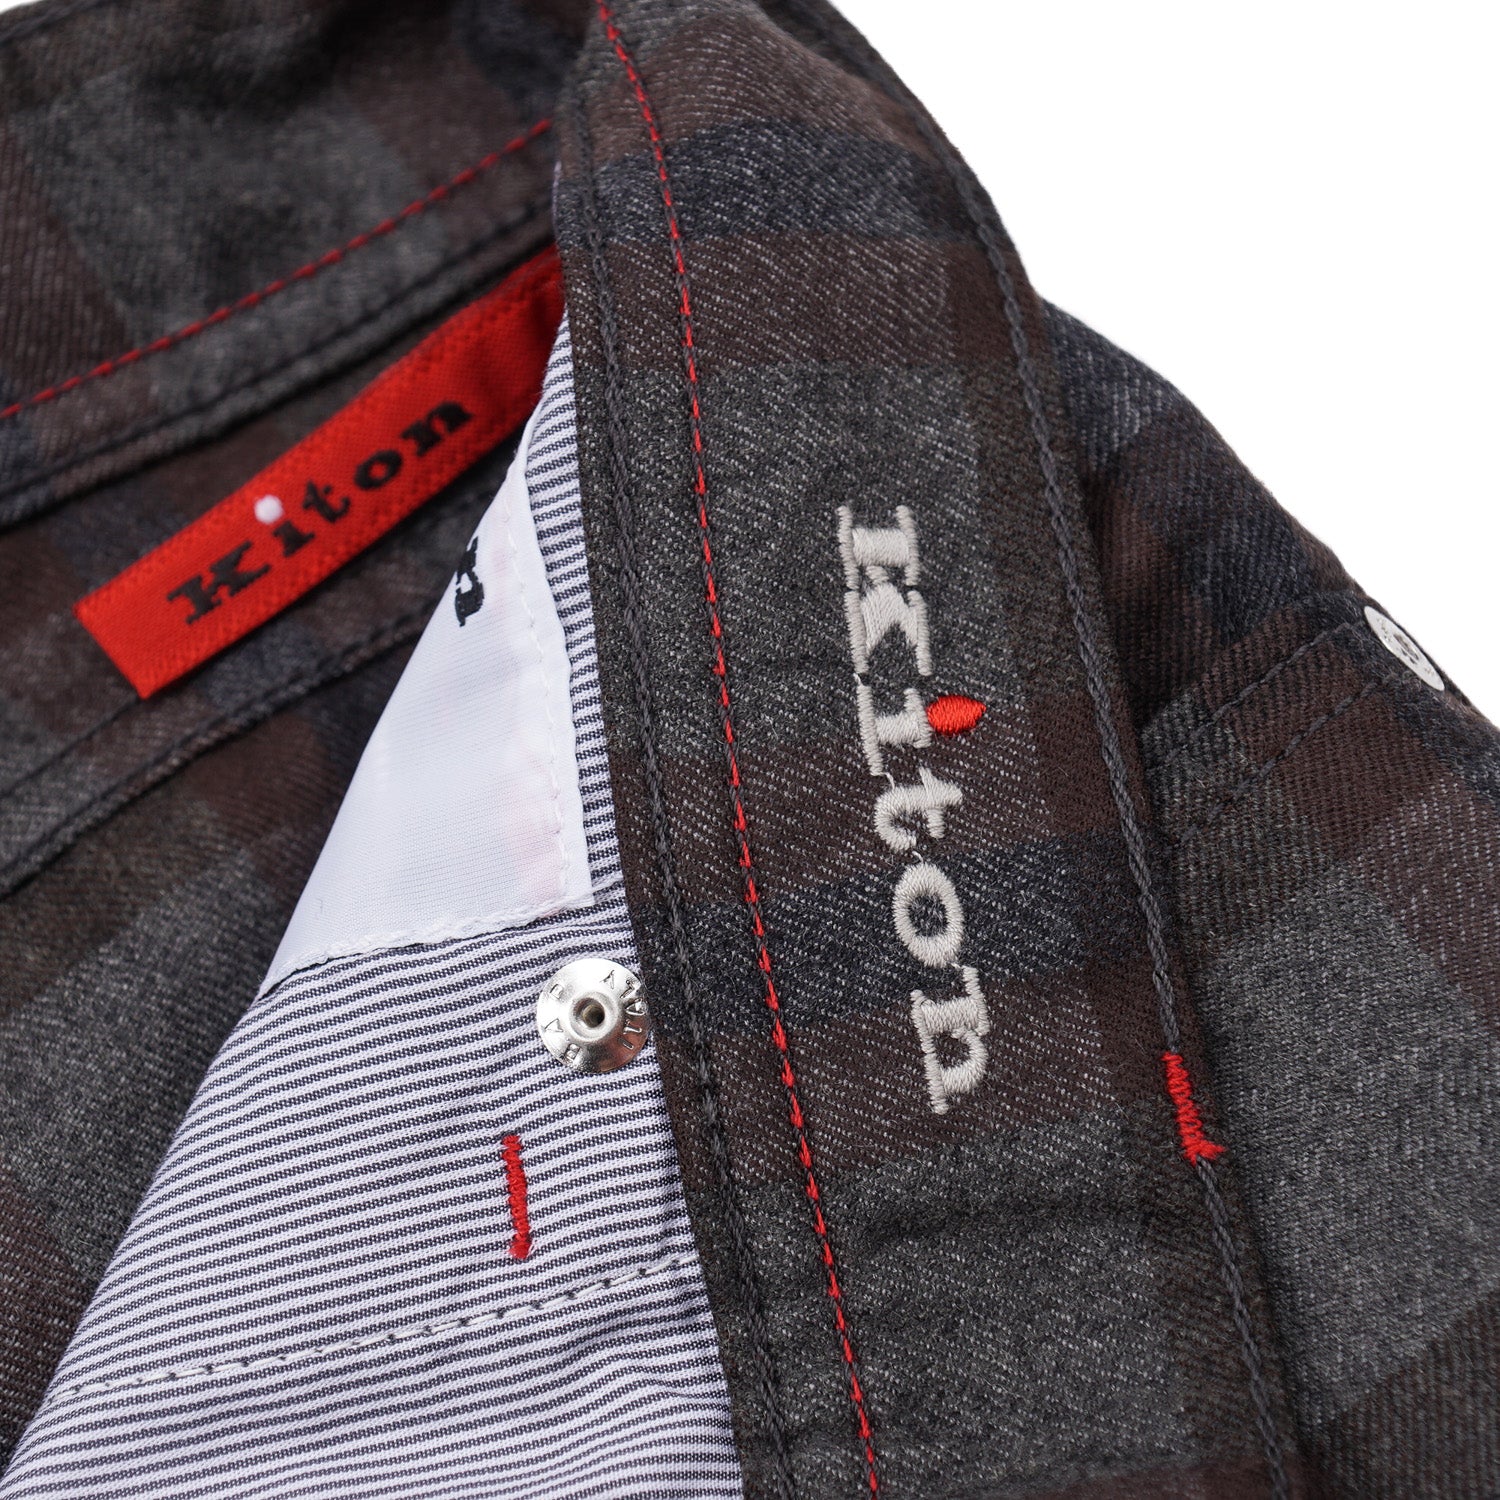 Kiton Slim Fit Five-Pocket Brushed Wool Pants - Top Shelf Apparel